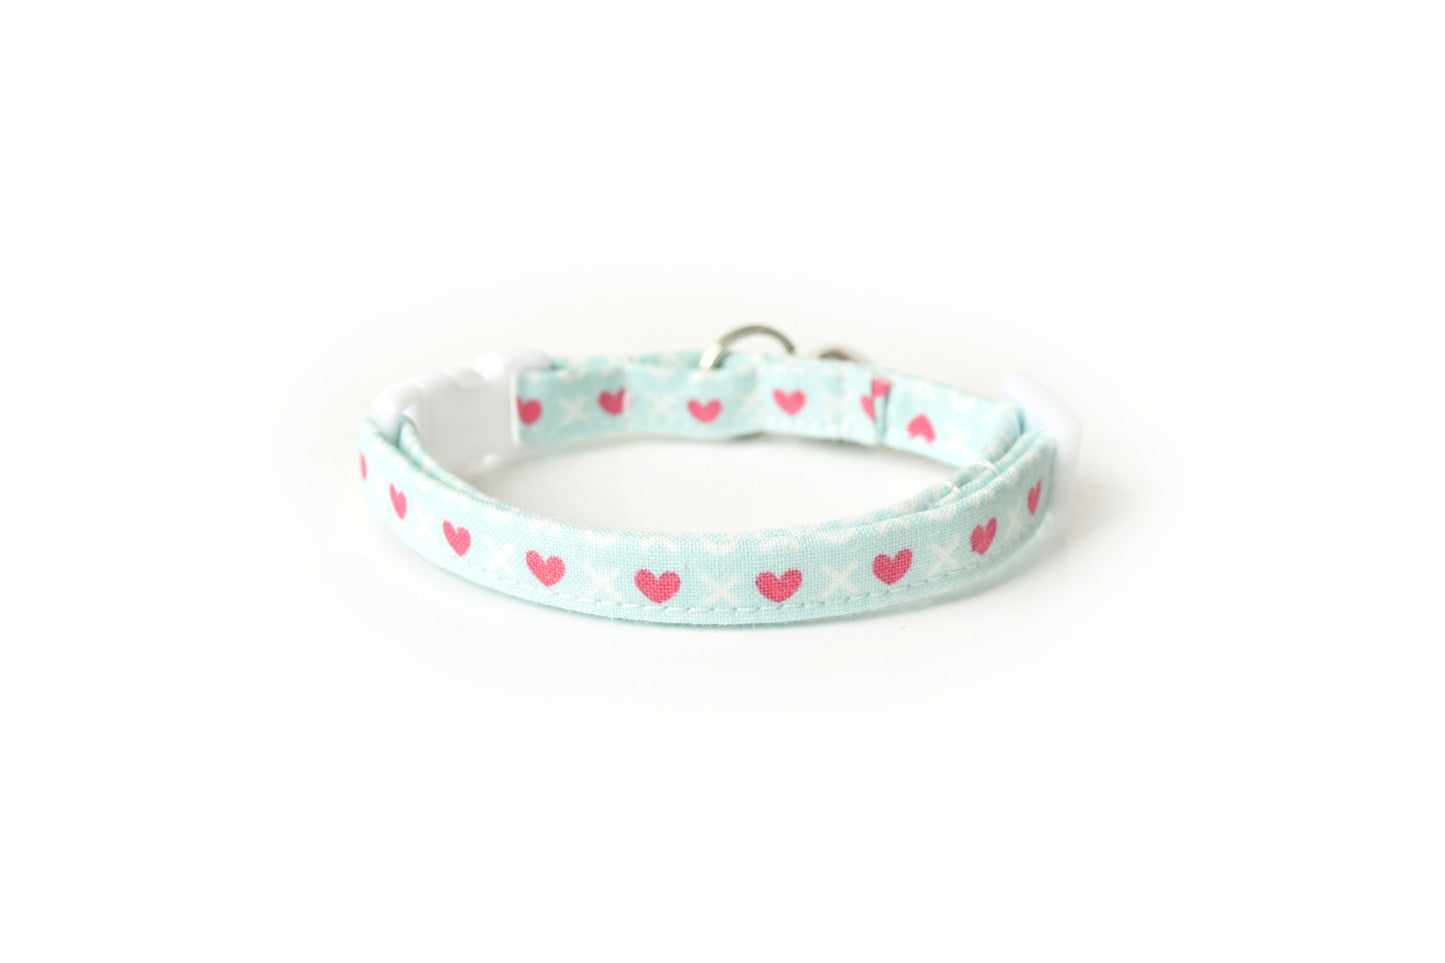 Mint Seafoam Cat Collar - Seafoam Green with Pink Hearts - Valentine's Day Cat Collar - Breakaway Cat Collar - Handmade by Kira's Pet Shop